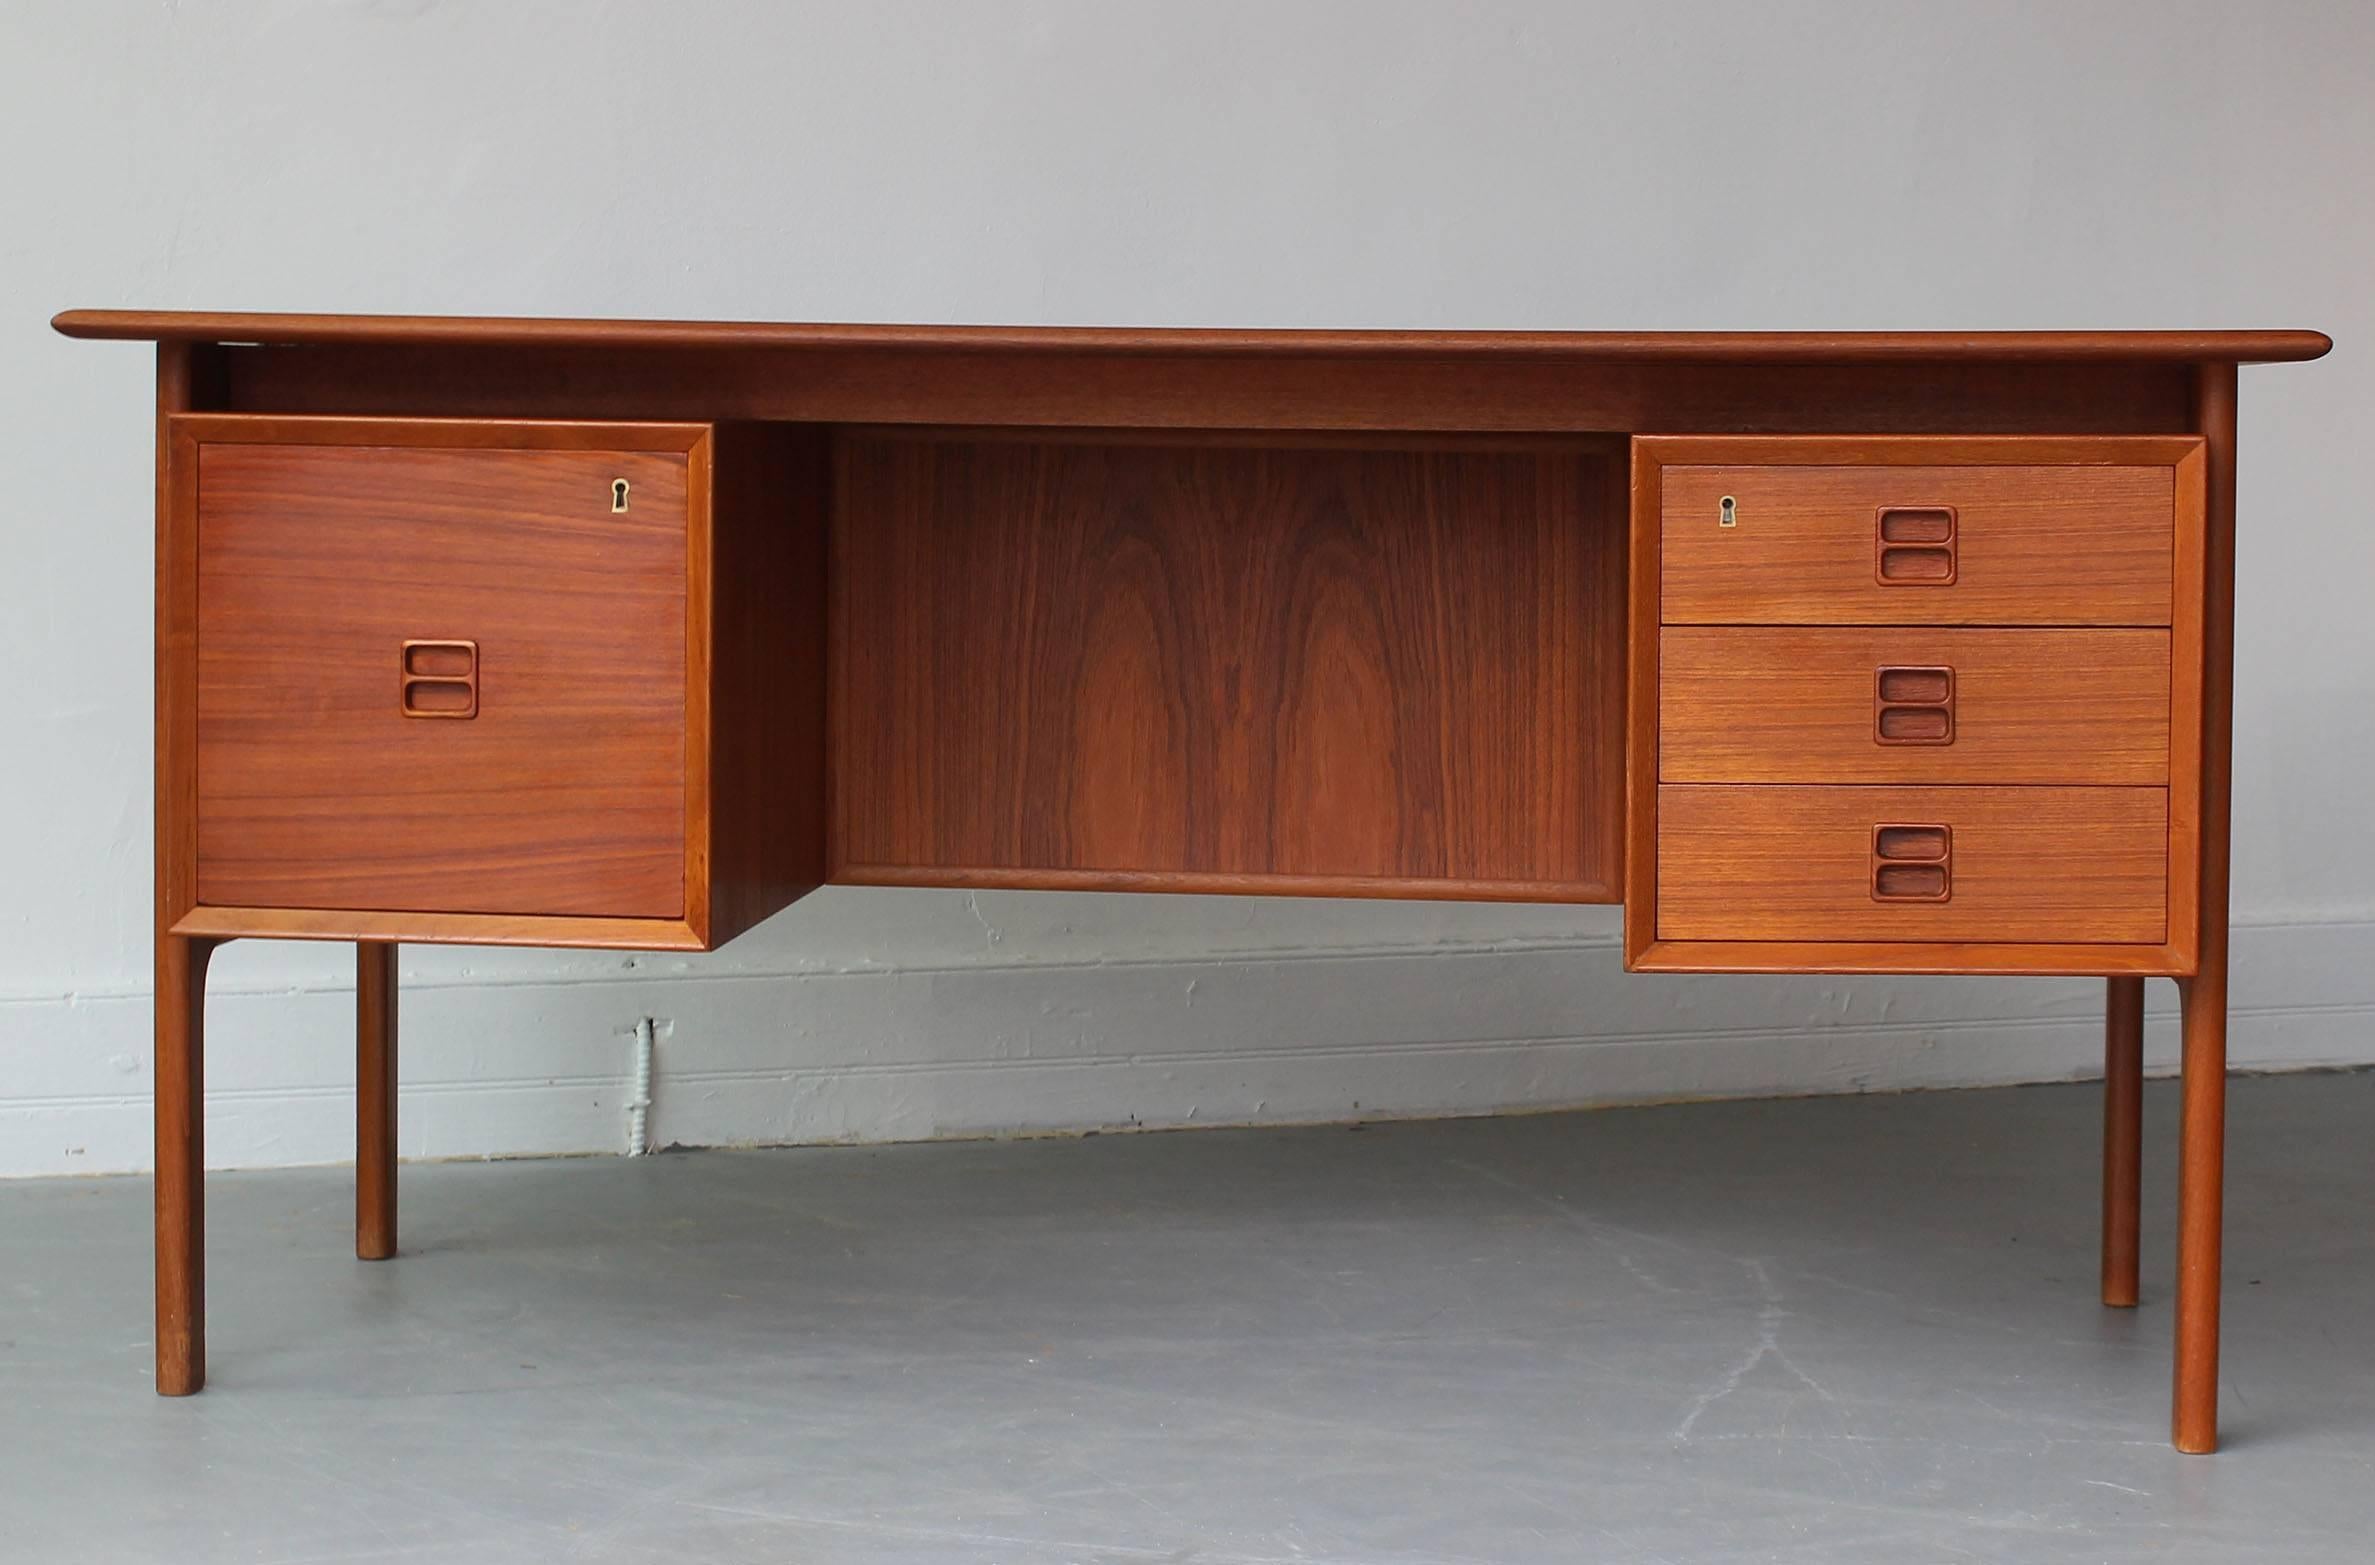 Teak desk designed by Gunni Omann, for Omann Jun Mobelfabrik, circa 1960s, Denmark. Rear open shelving with floating drawers and central teak divider. Lightly and lovingly restored.